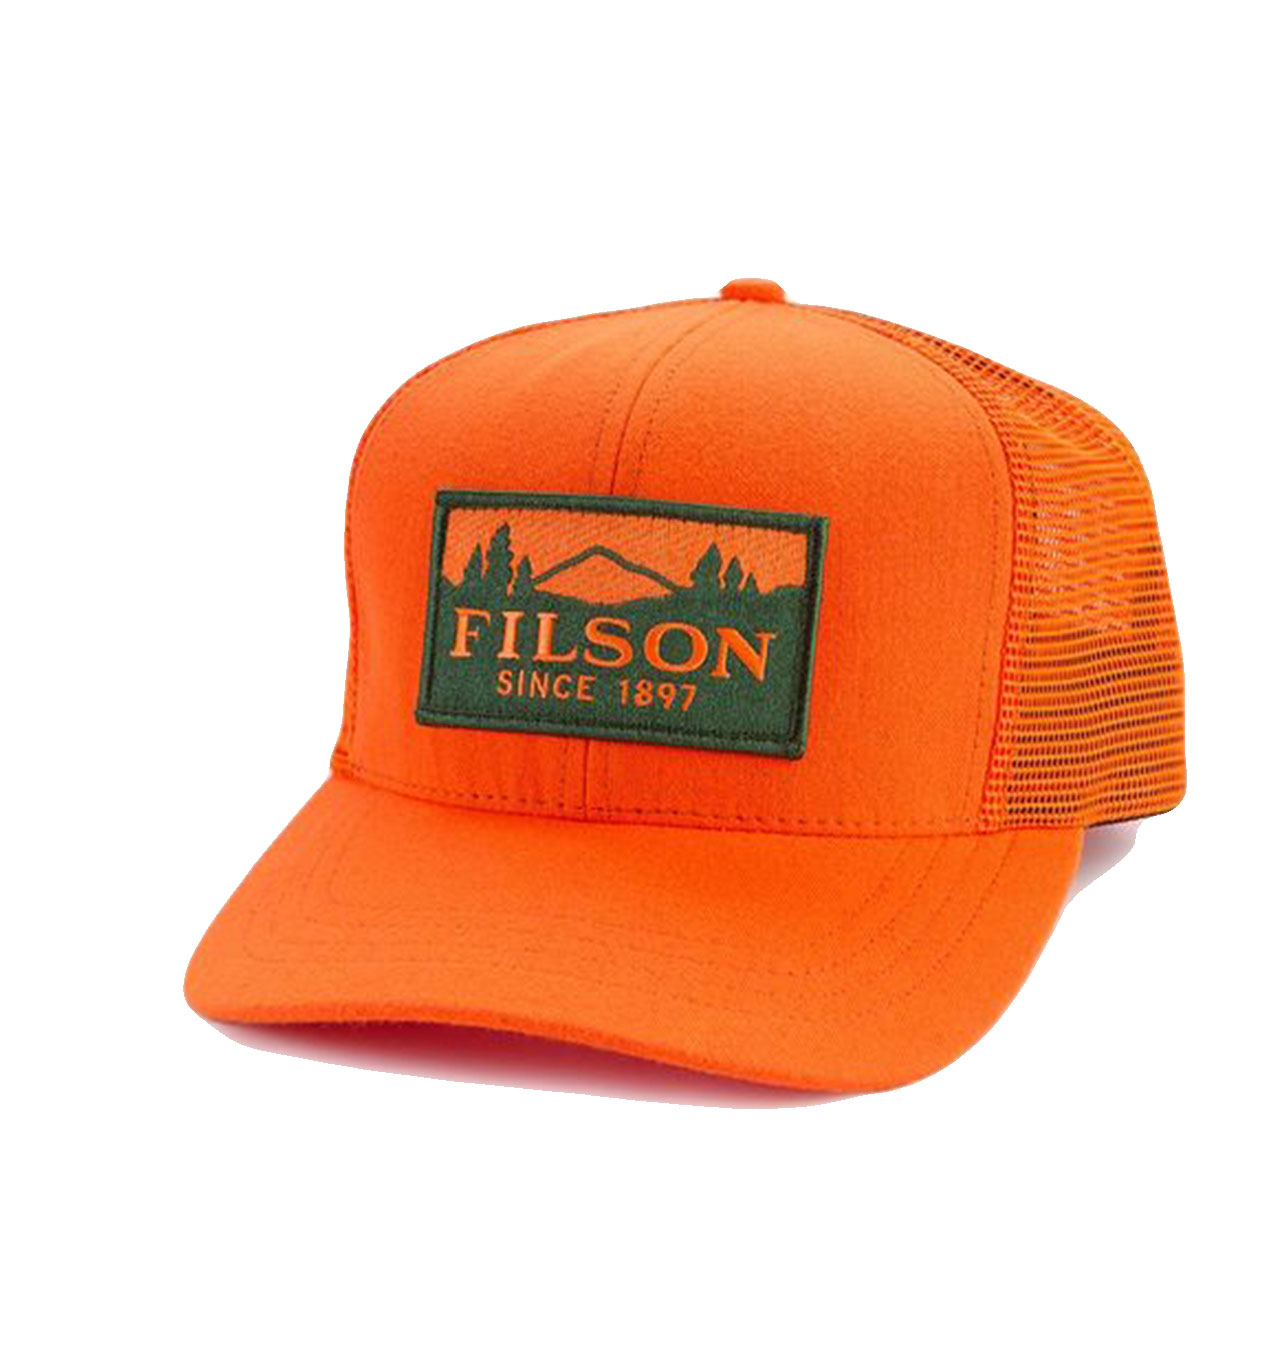 Filson - Logger Mesh Cap - Blaze Orange